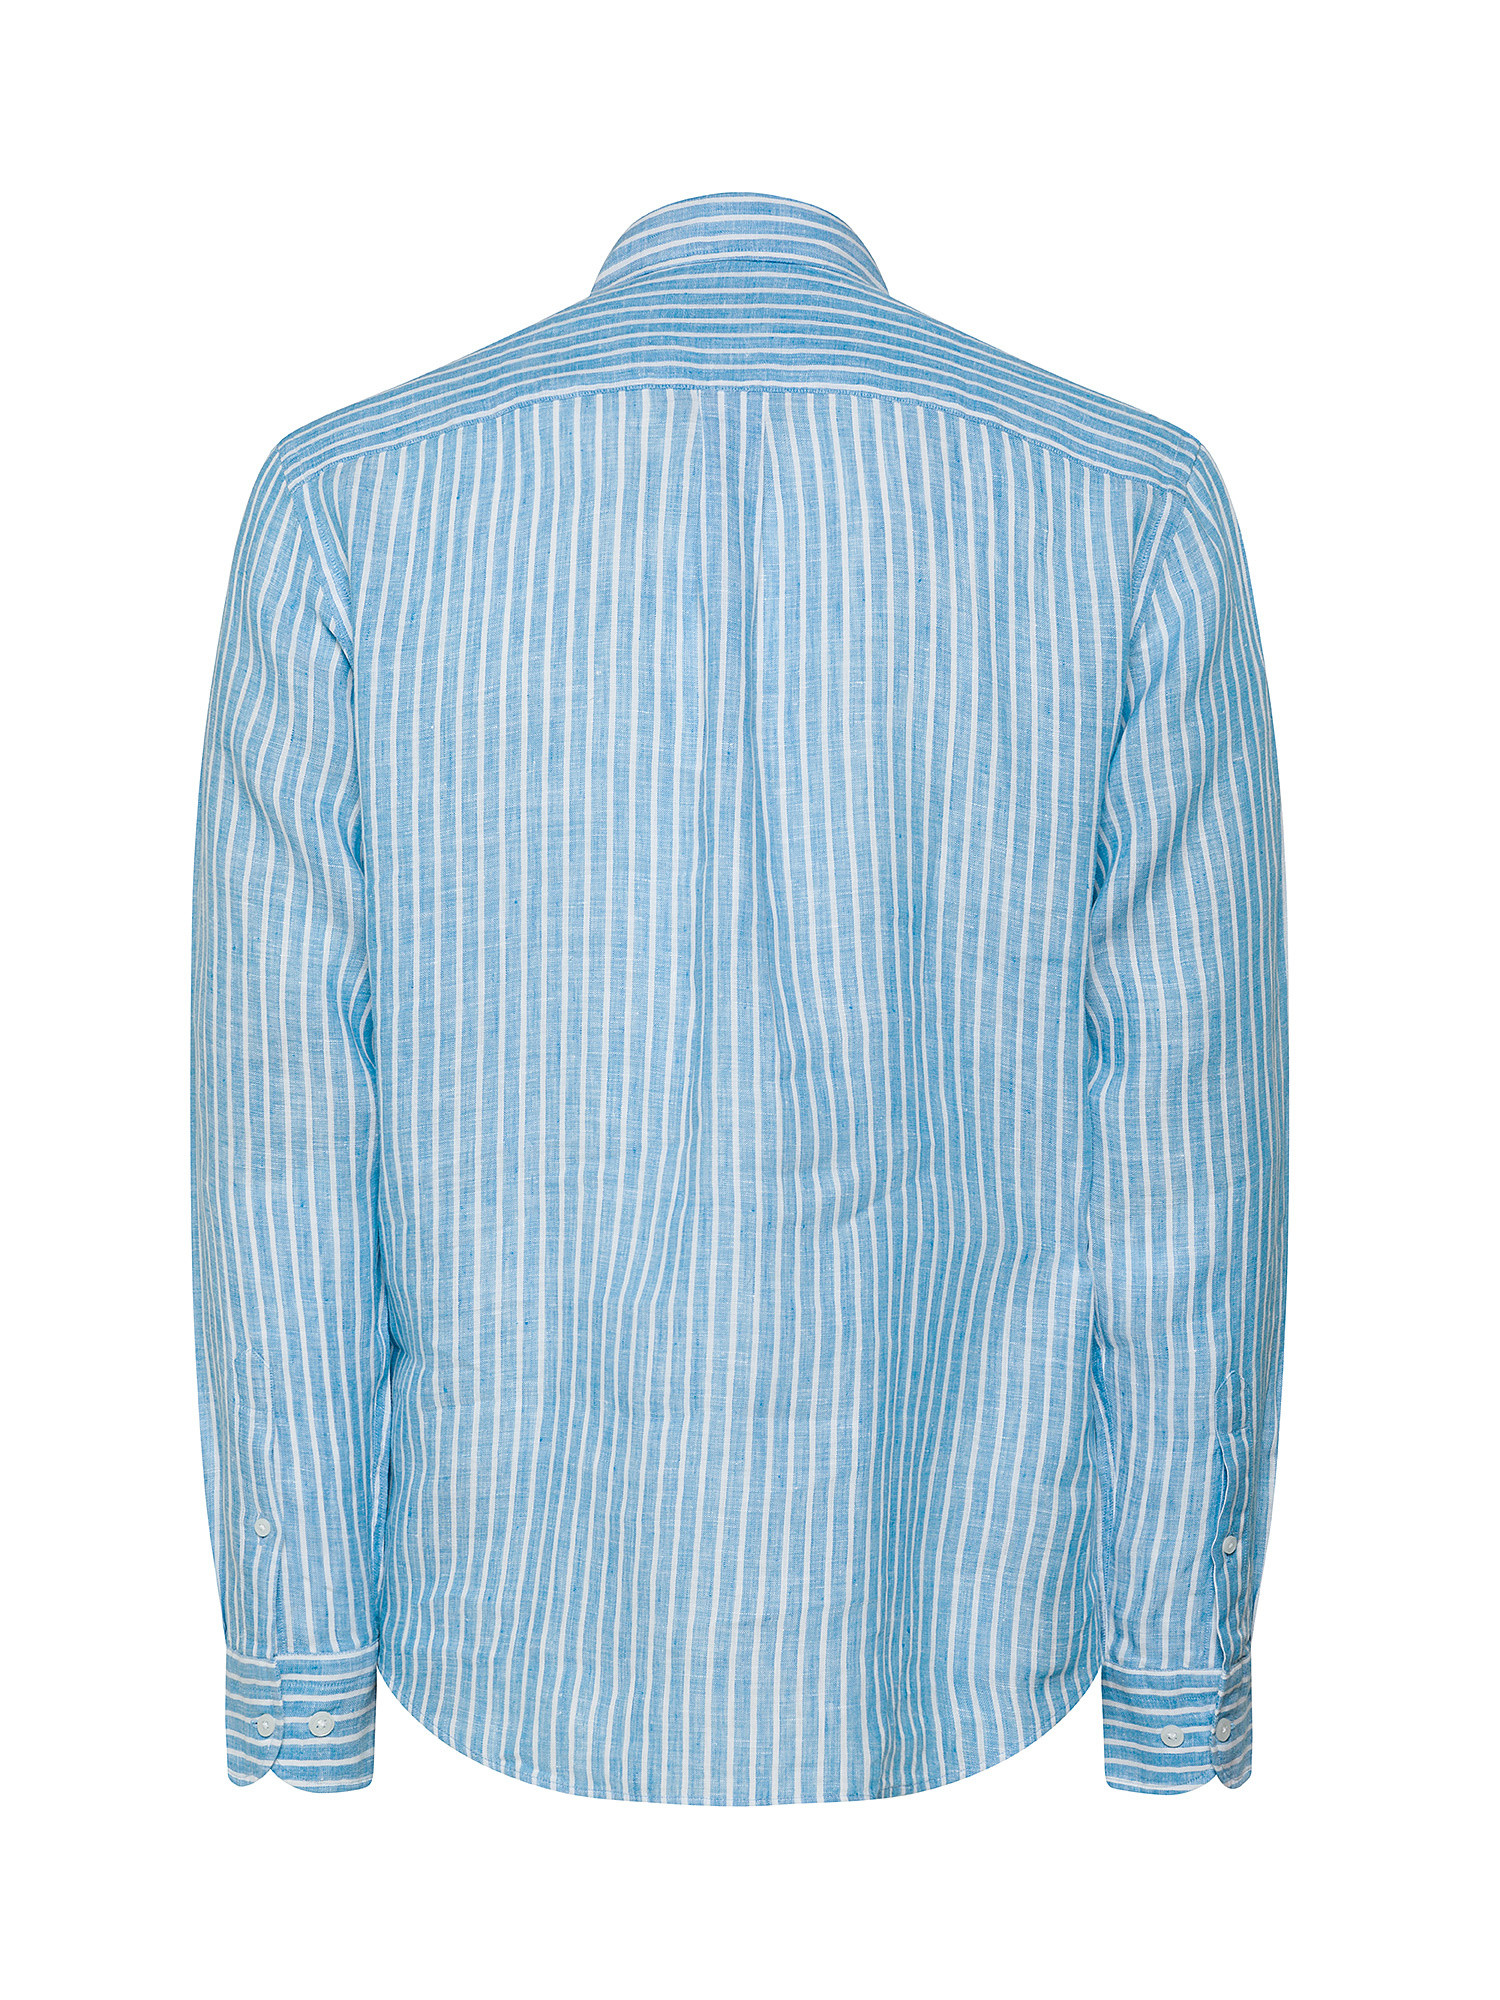 Luca D'Altieri - Camicia tailor fit in puro lino, Azzurro turchese, large image number 1